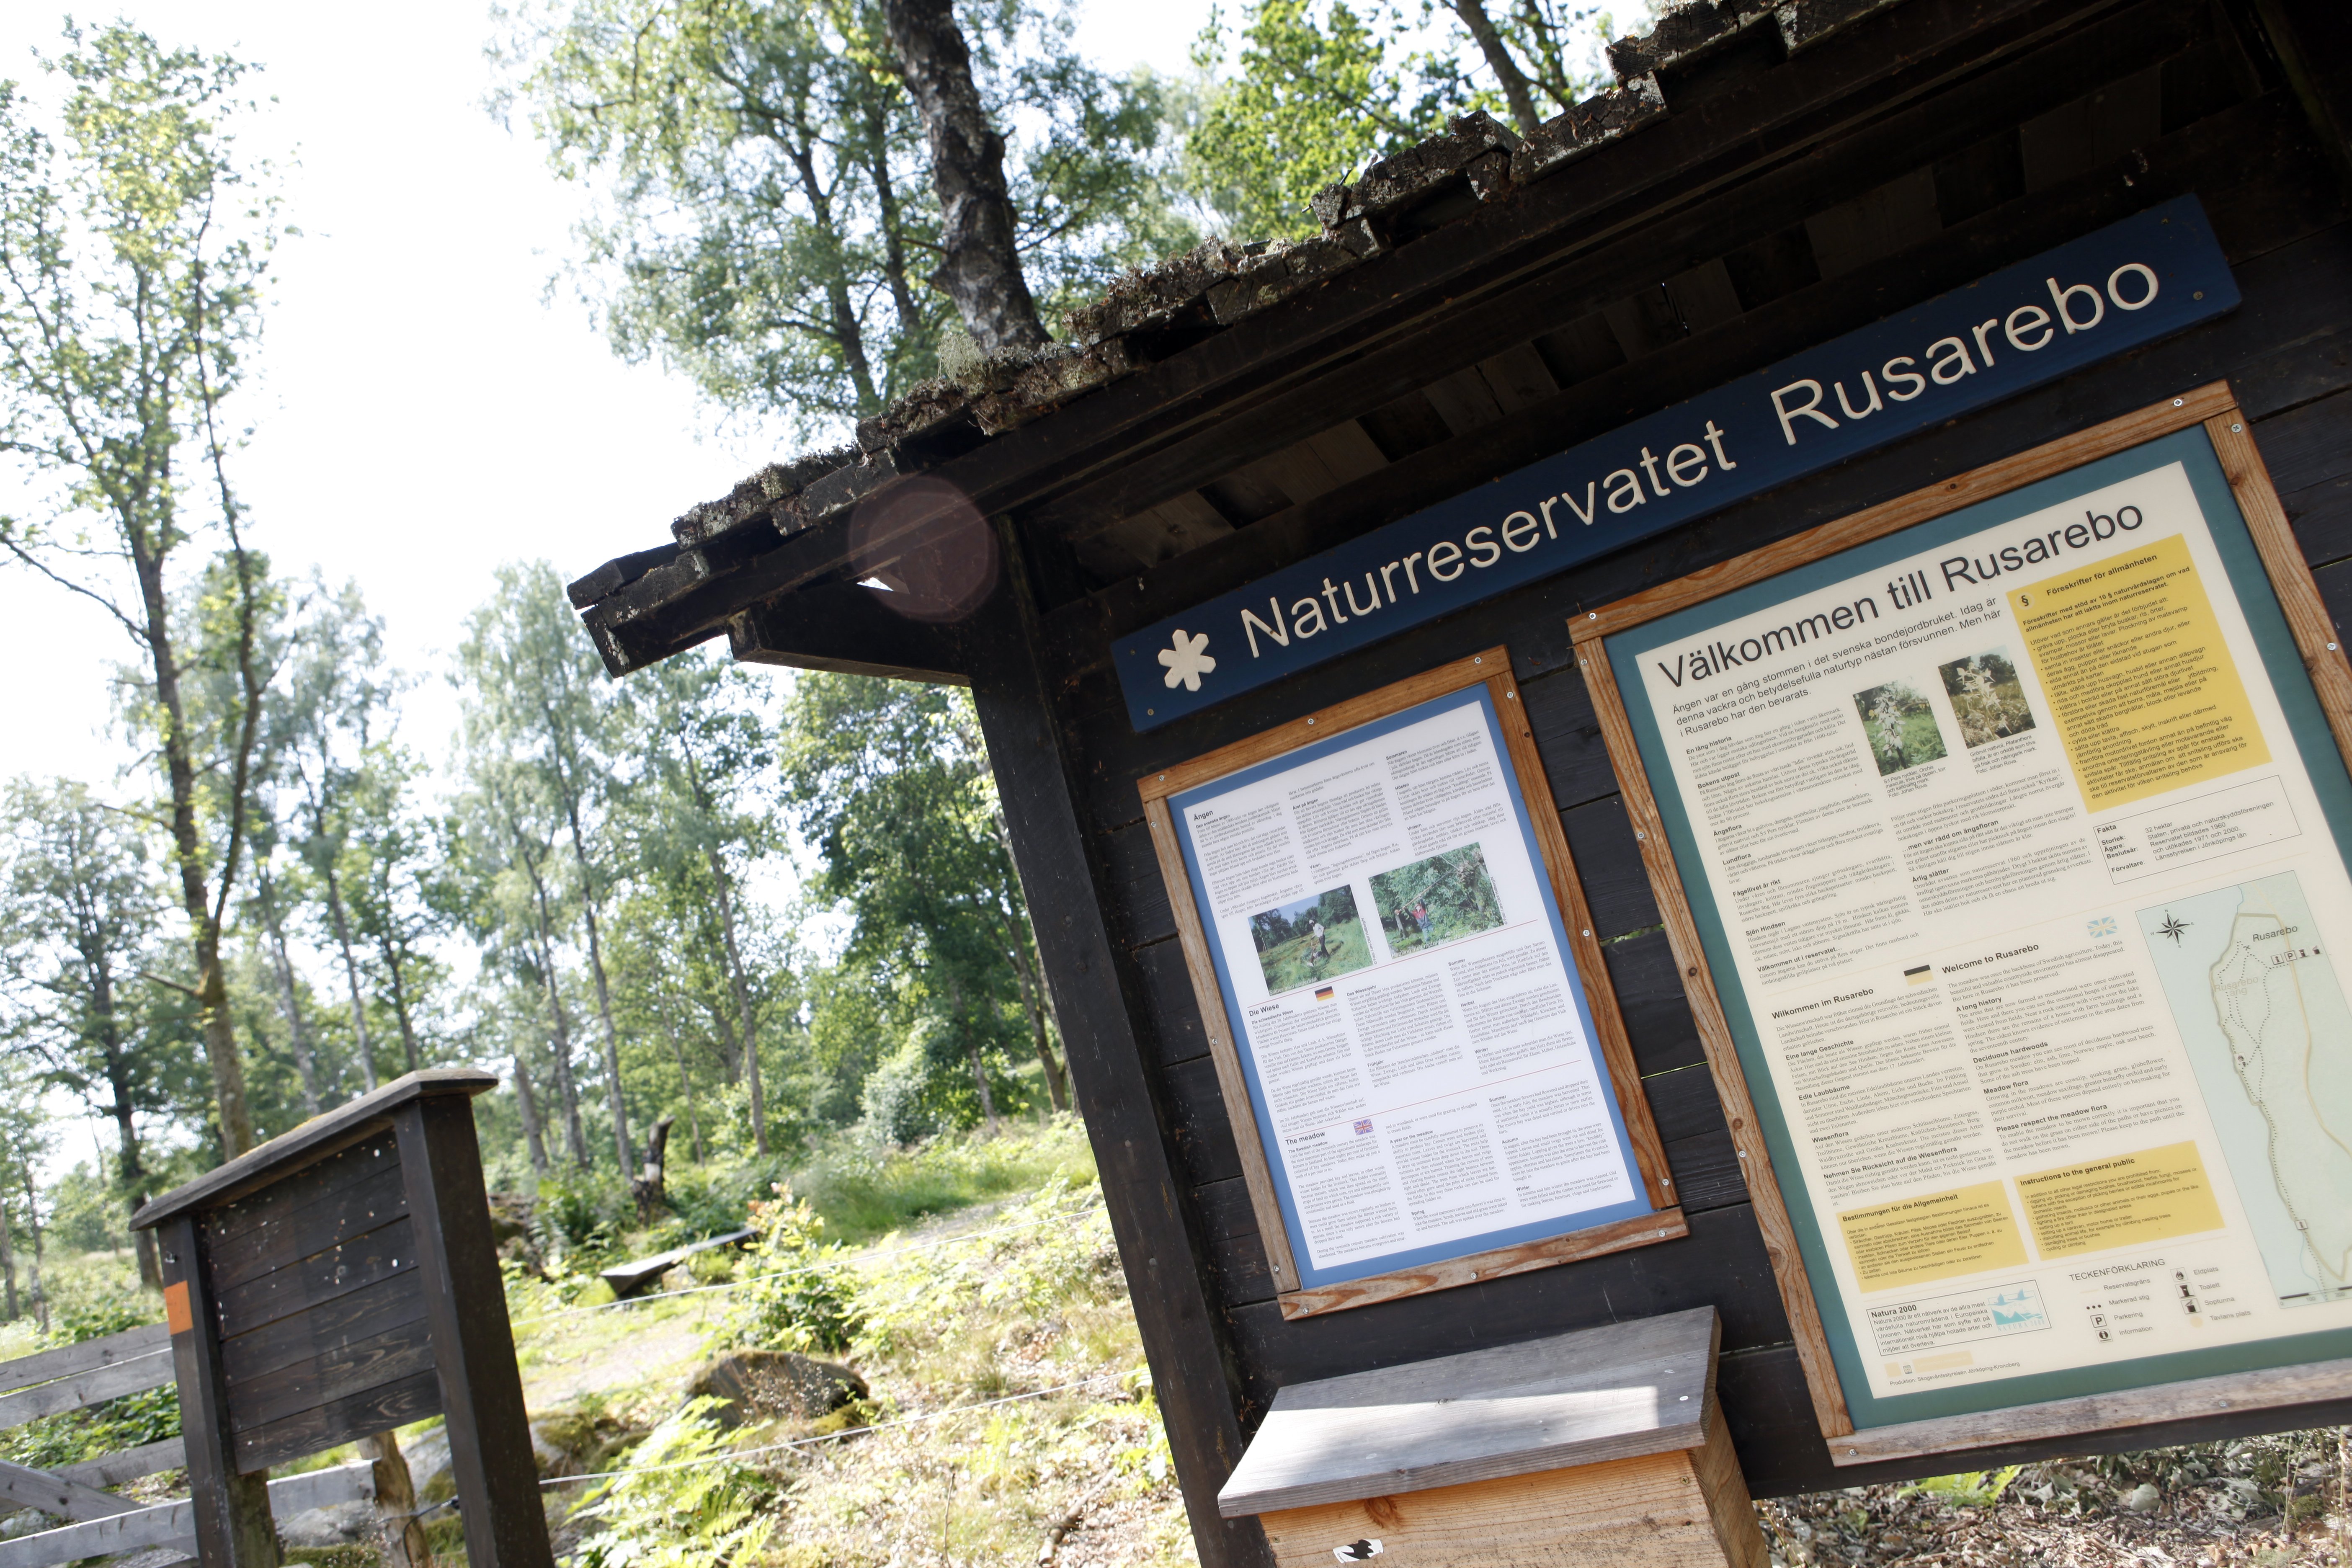 Rusarebo Äng Naturreservat